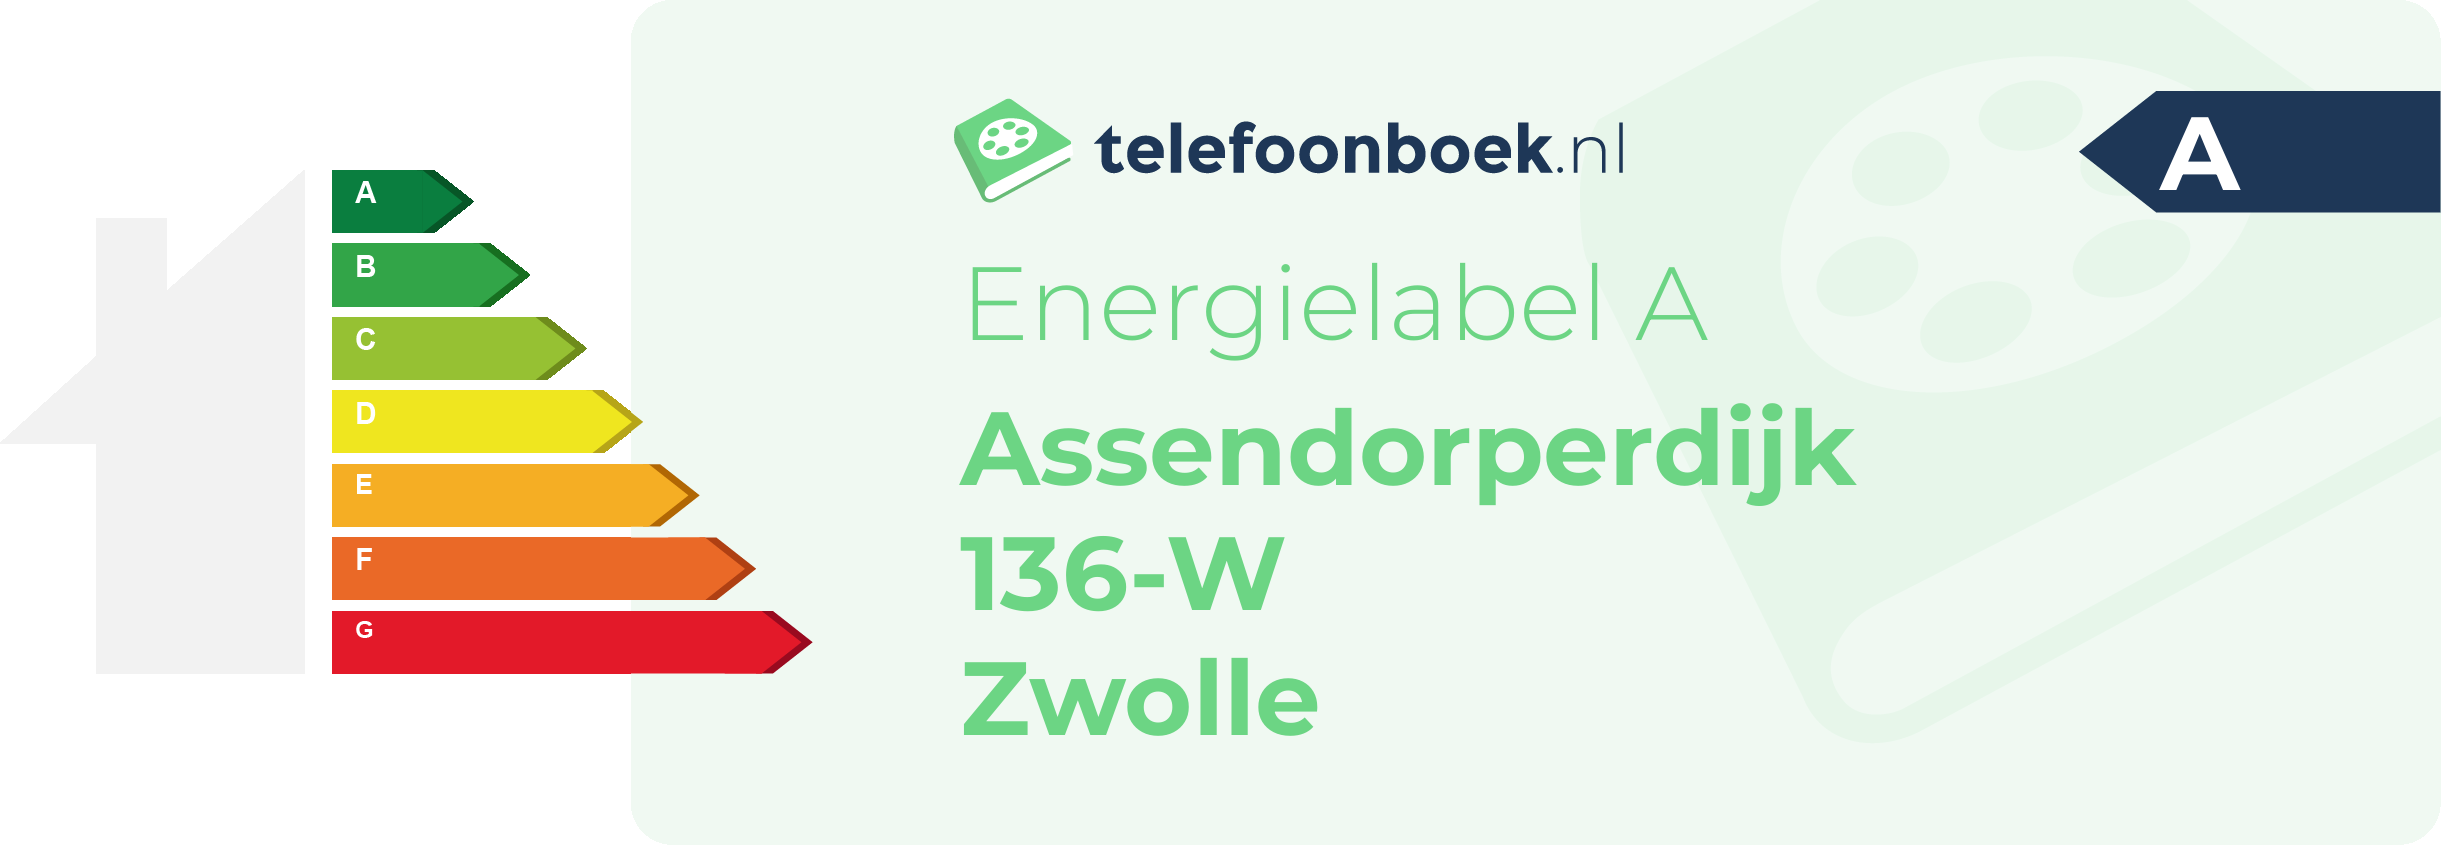 Energielabel Assendorperdijk 136-W Zwolle